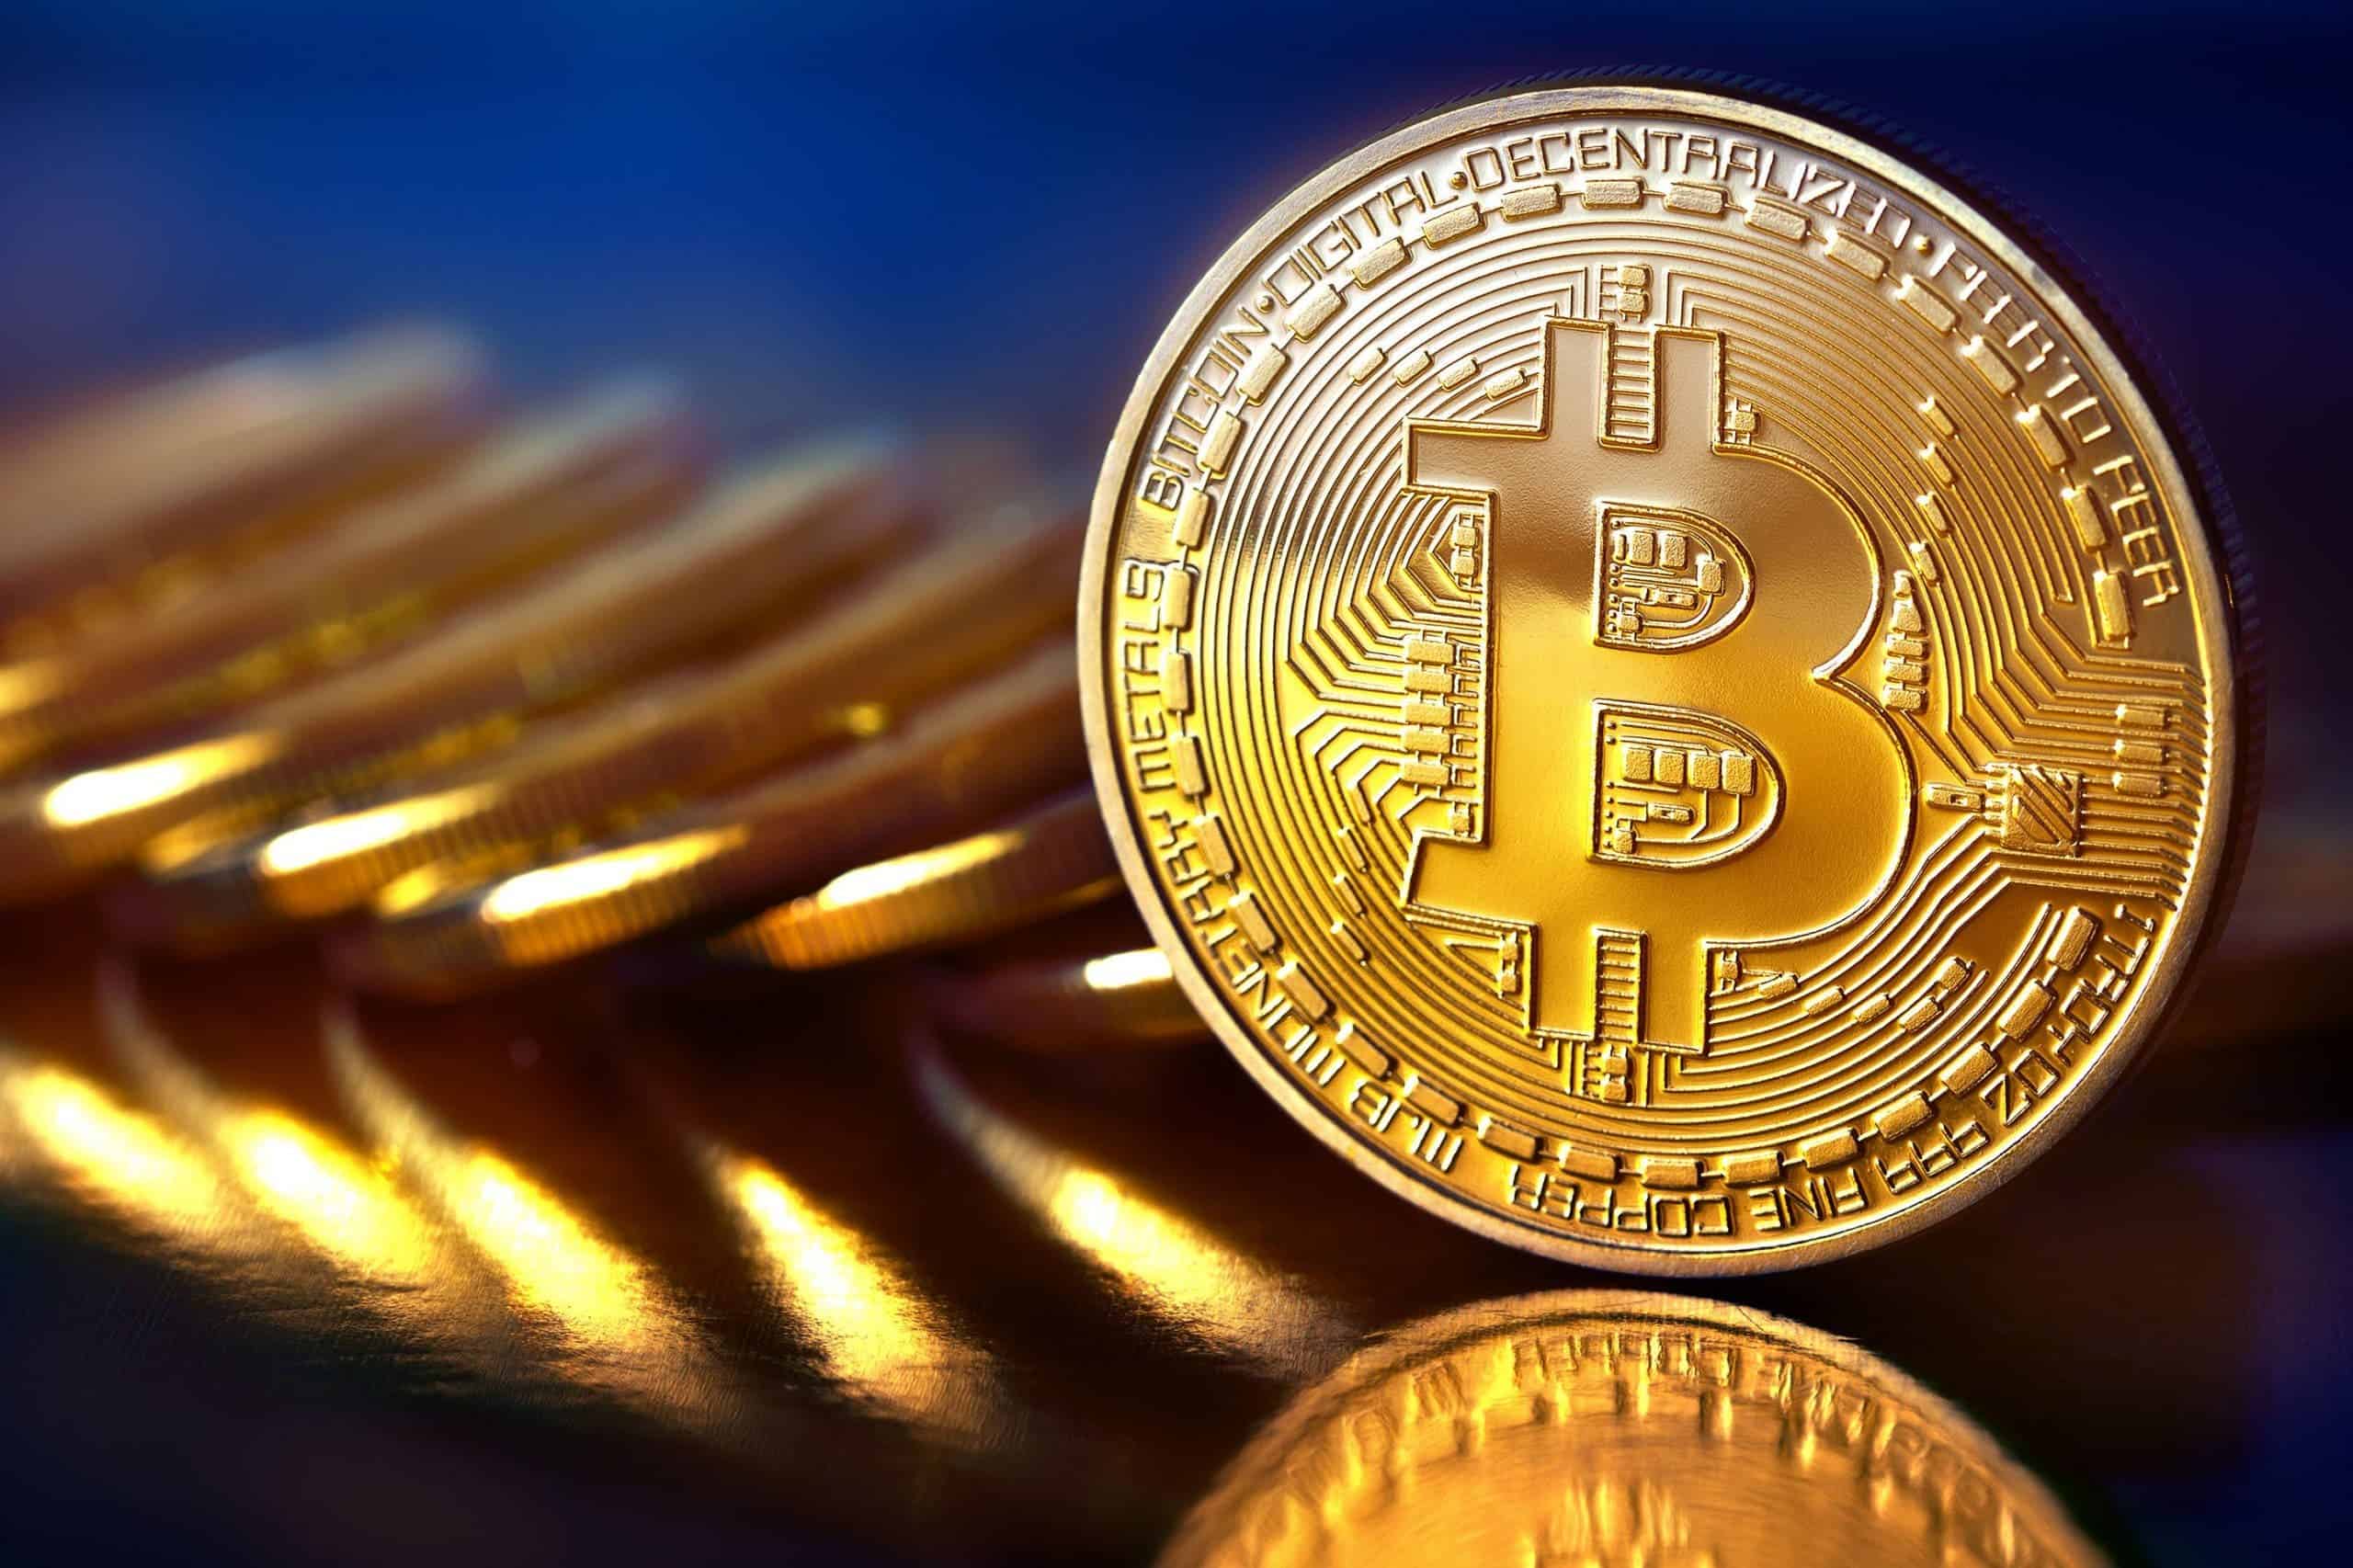 Bitcoin Cash cryptocurrencies